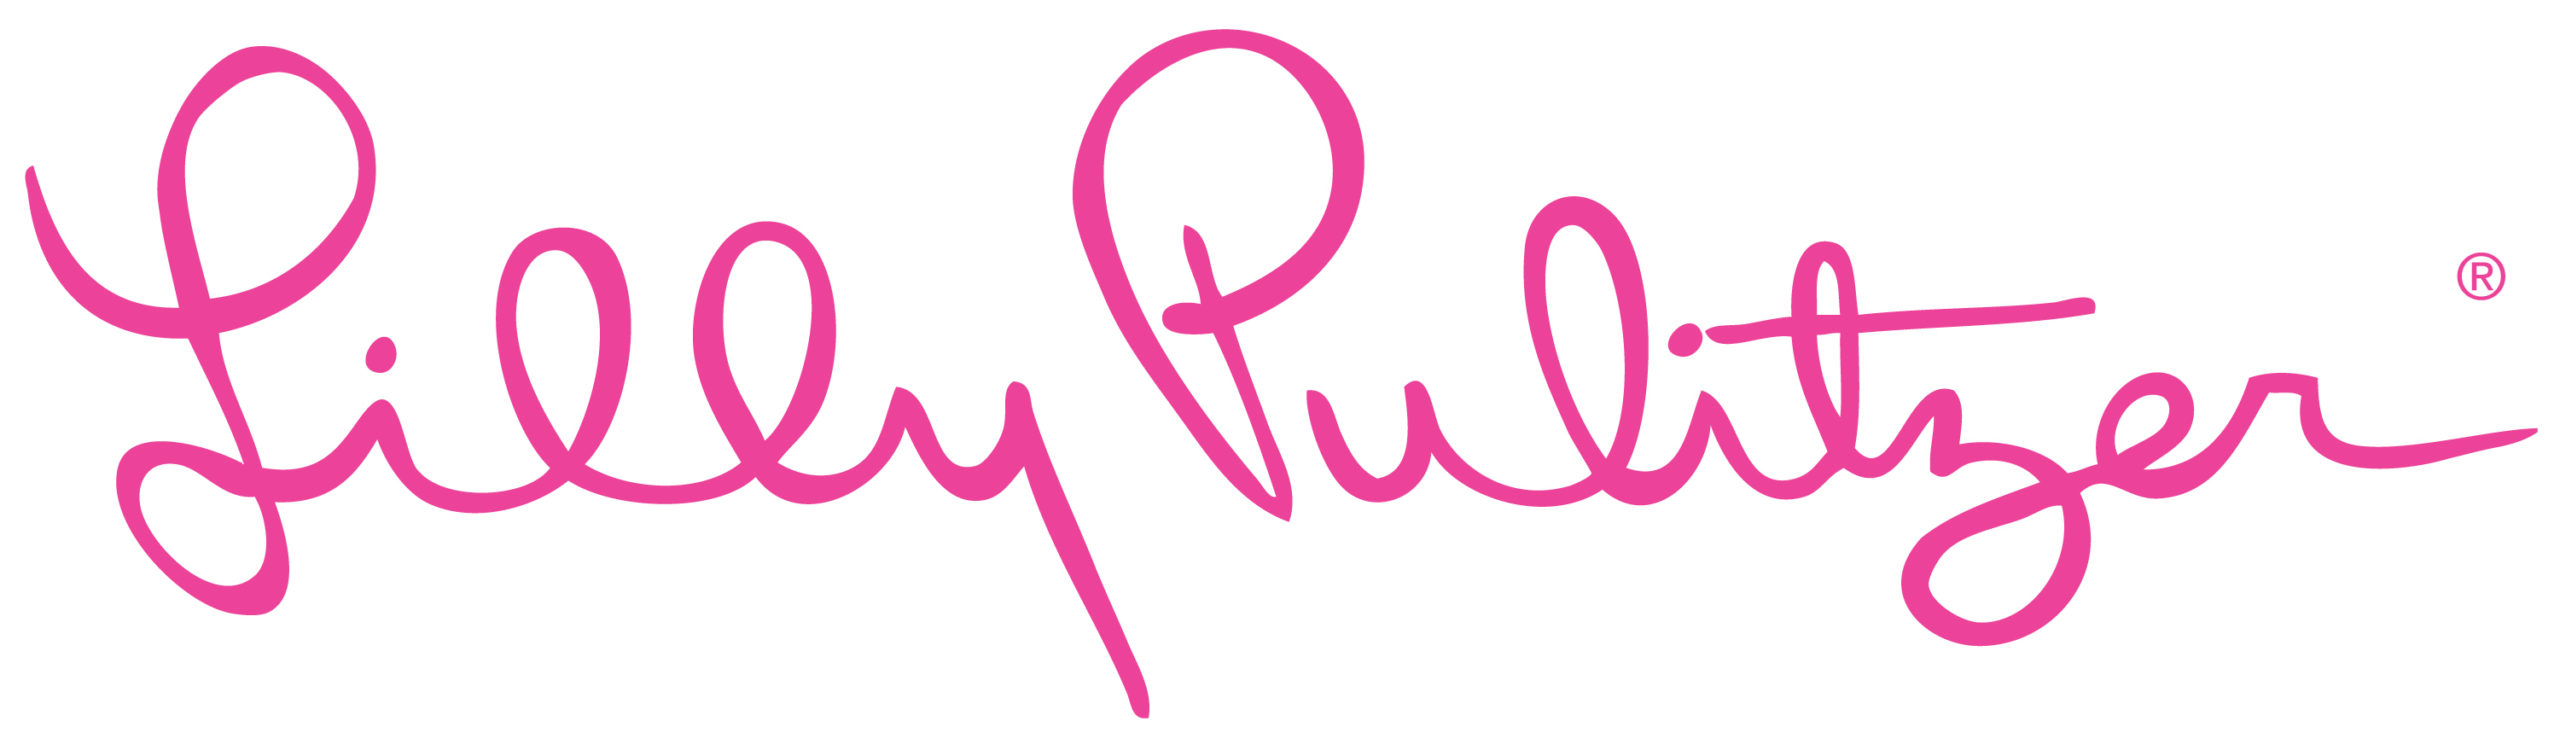 Lilly-Pulitzer-Logo-a